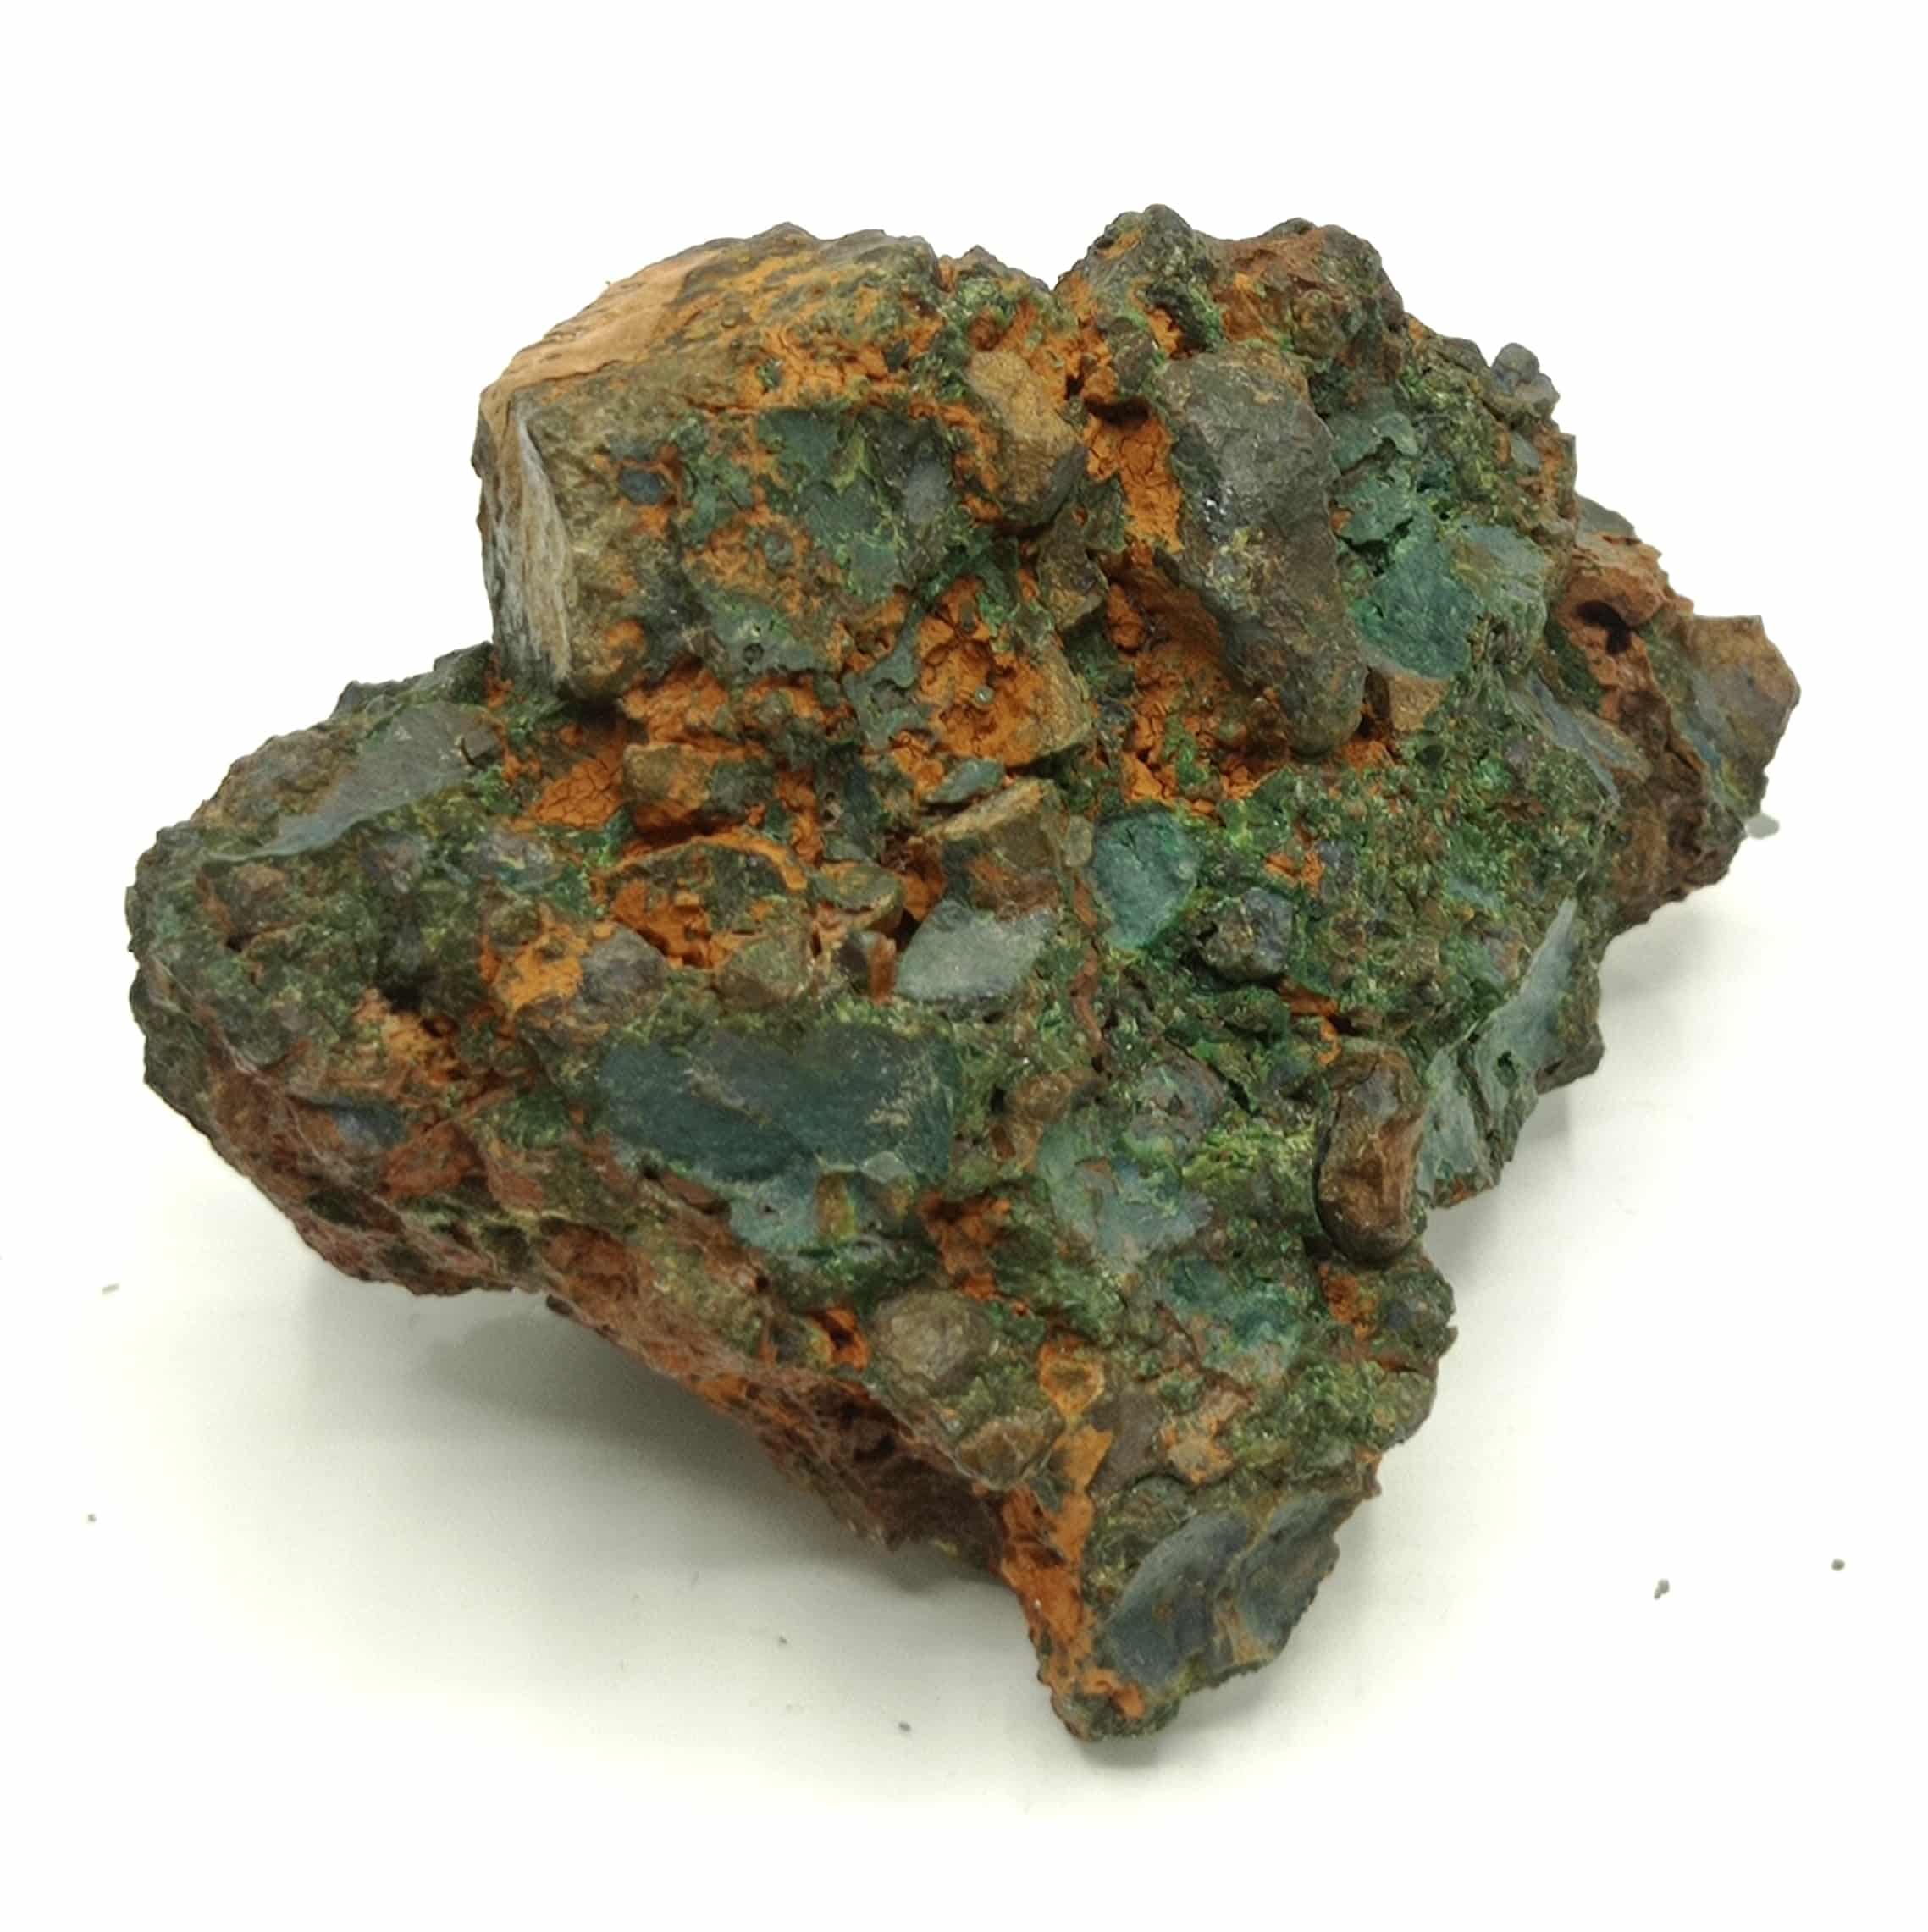 Nickelgymnit (Antigorite, Garniérite), Nouvelle-Calédonie.